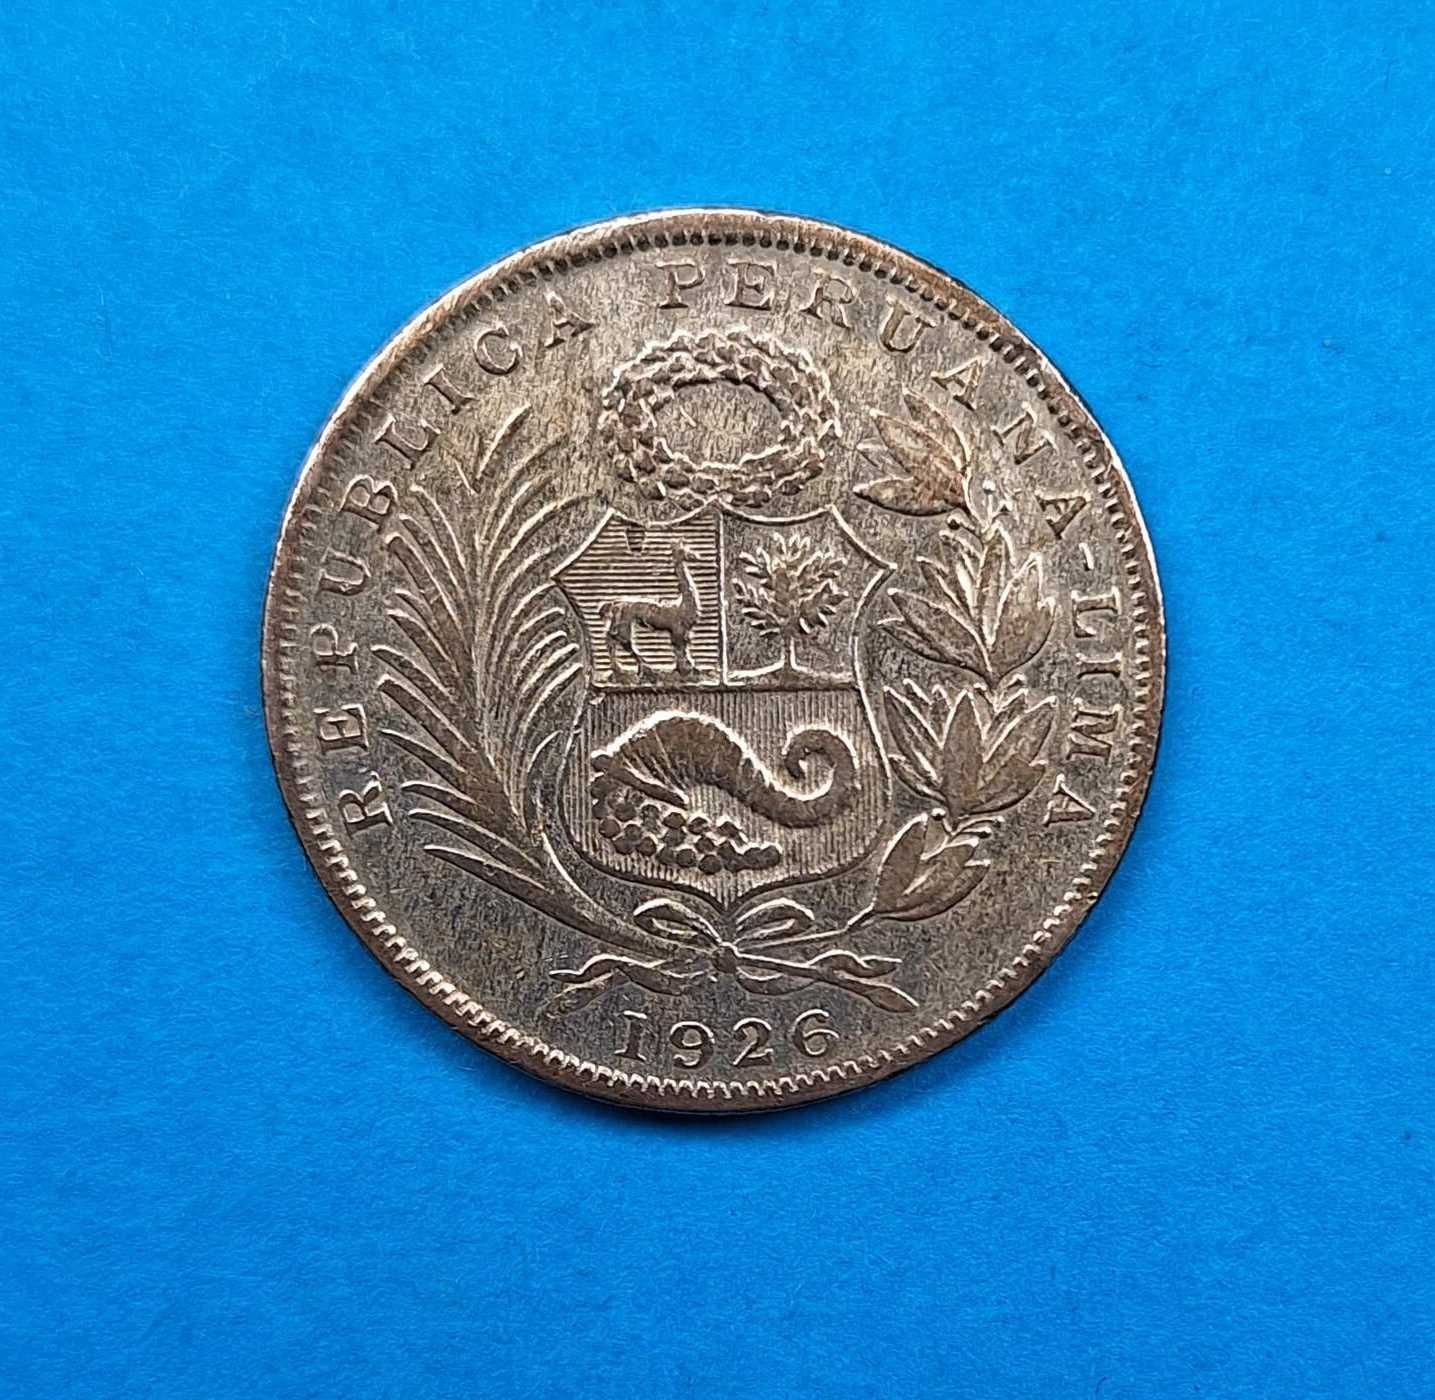 Peru 1/2 sola rok 1926, bardzo dobry stan, srebro 0,500